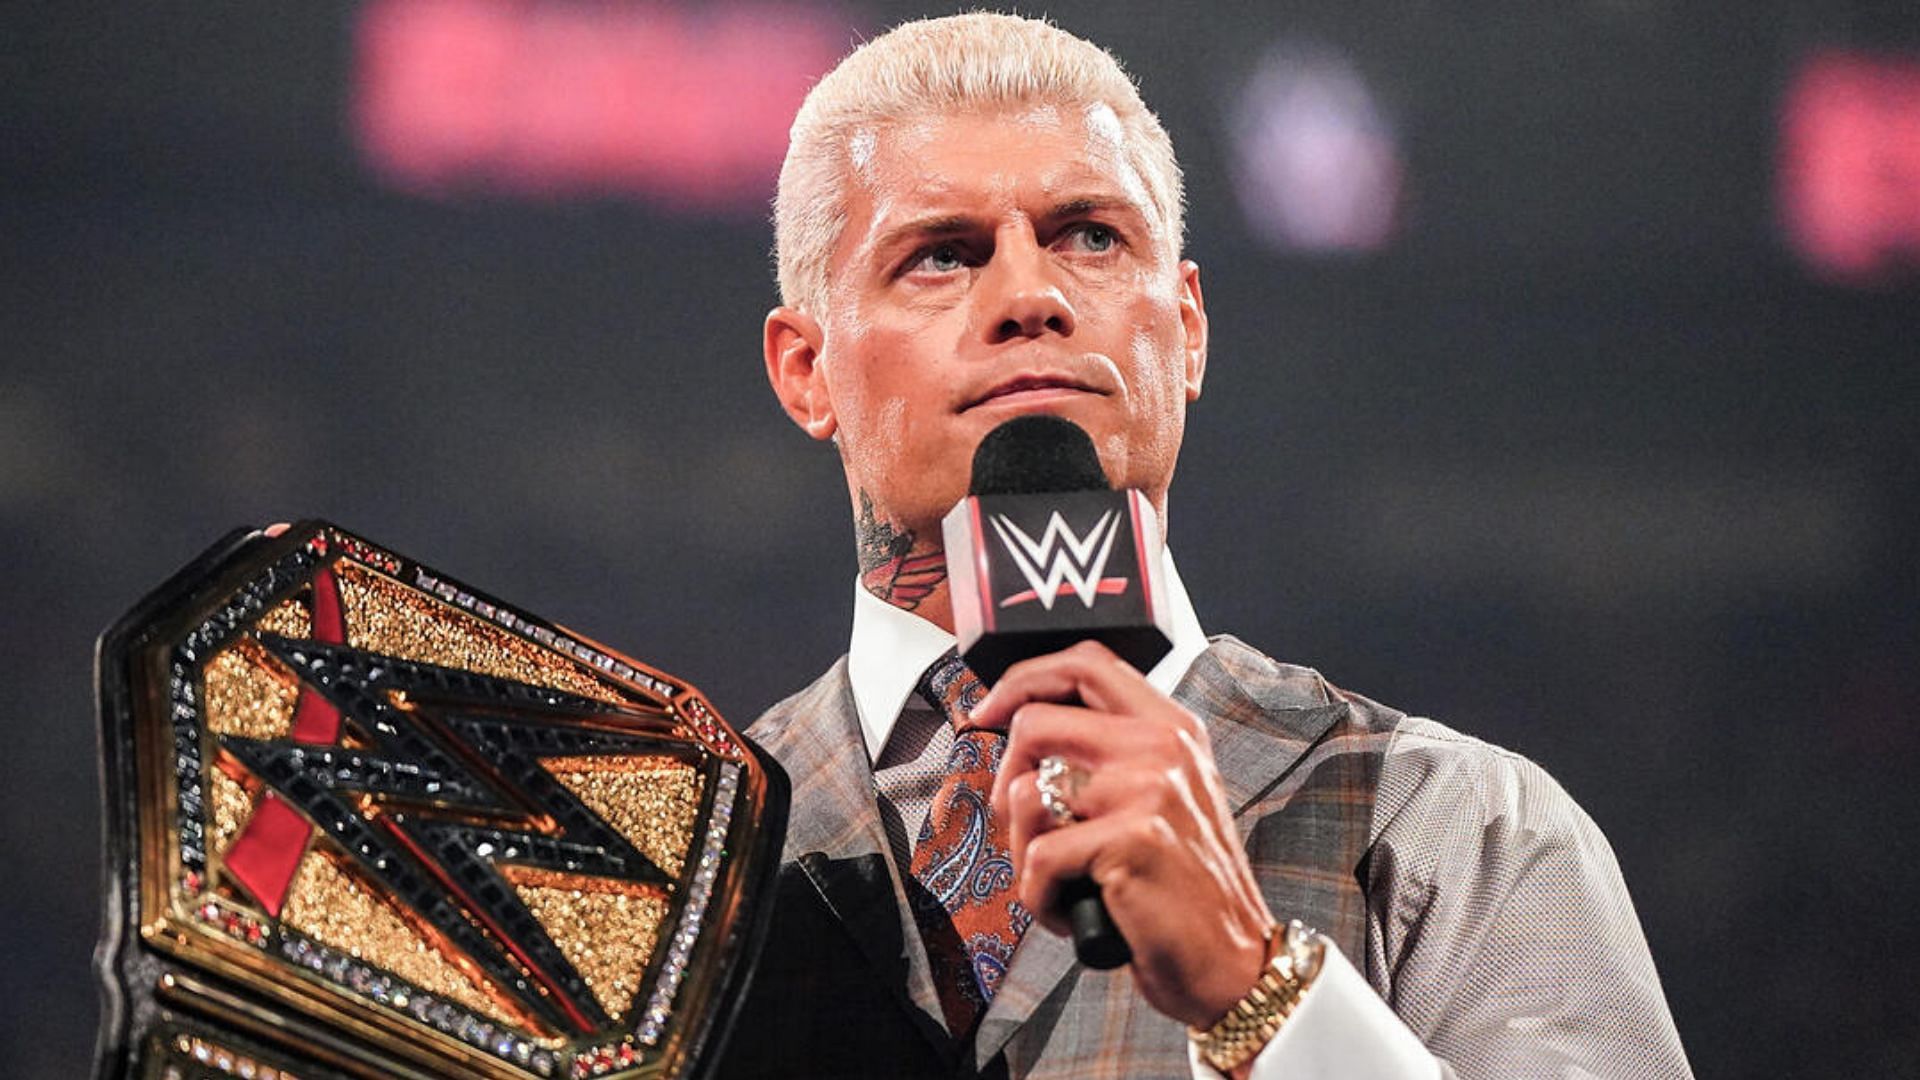 Rhodes became champion at WrestleMania XL.